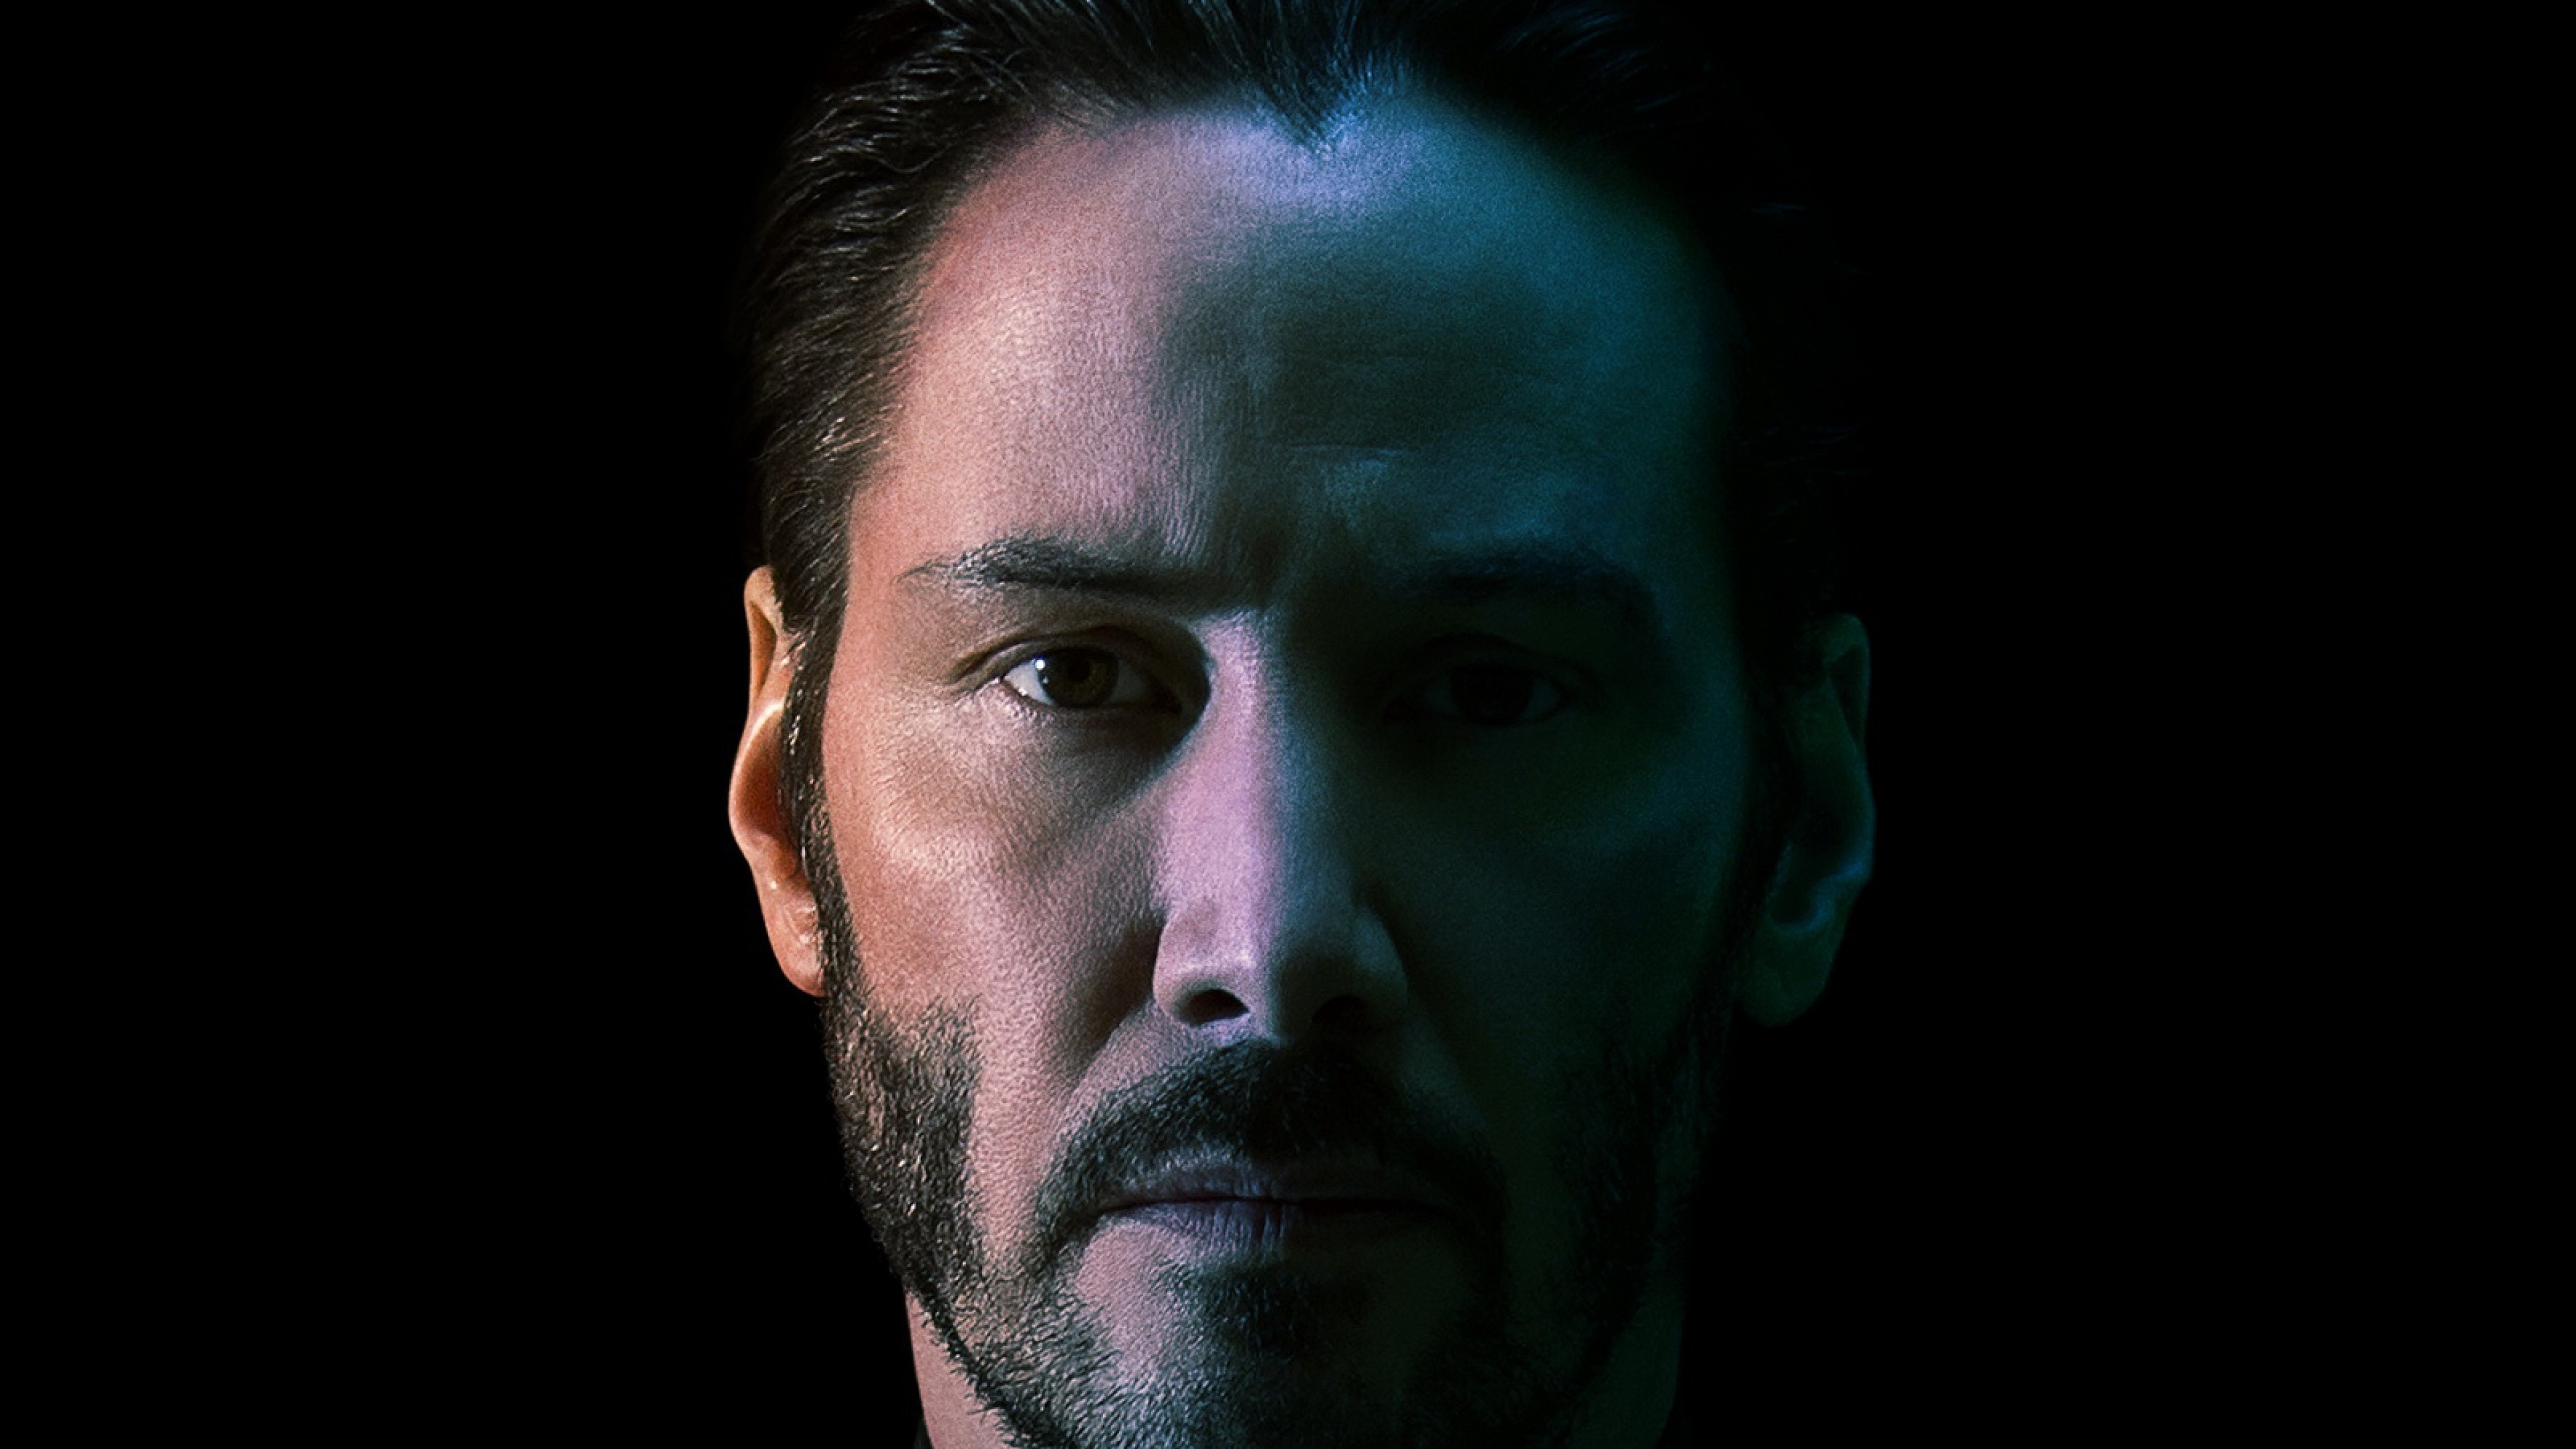 Keanu Reeves as John Wick for 3840 x 2160 Ultra HD resolution